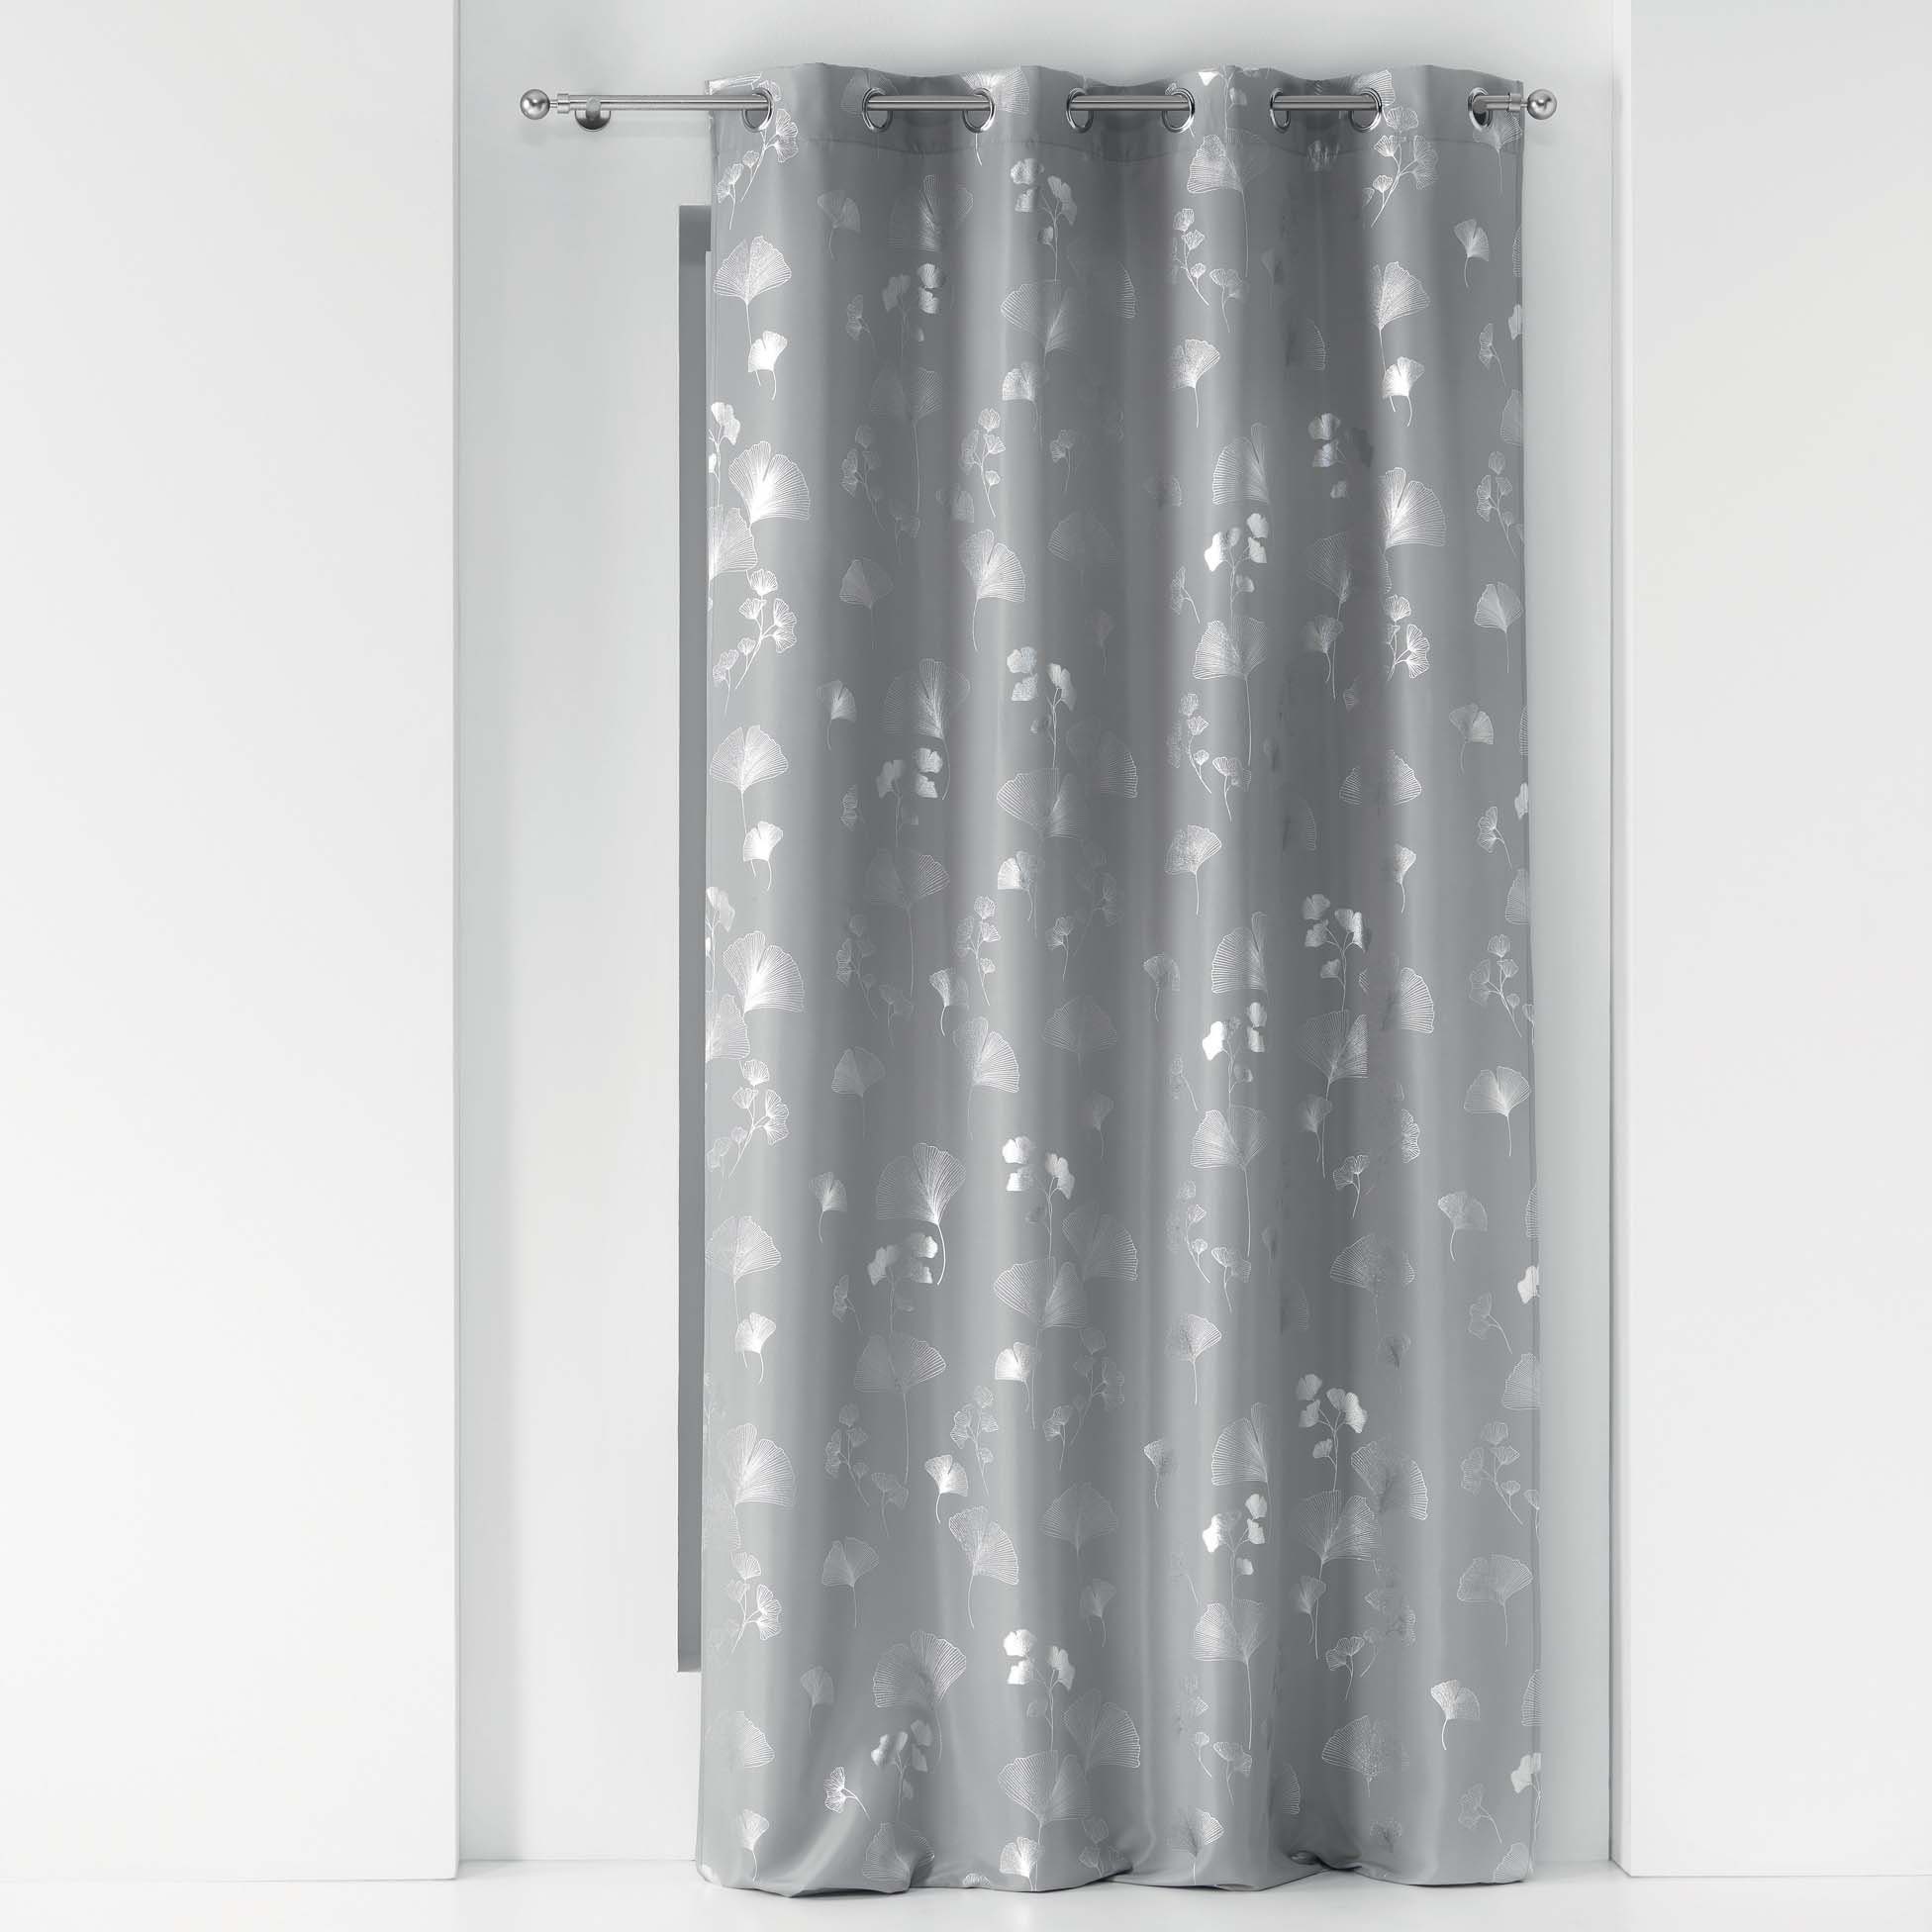 Vorhang, Ösen, halbtransparent, grau Vorhang 140x260cm Blattdruck dynamic24, silber Ösenschal